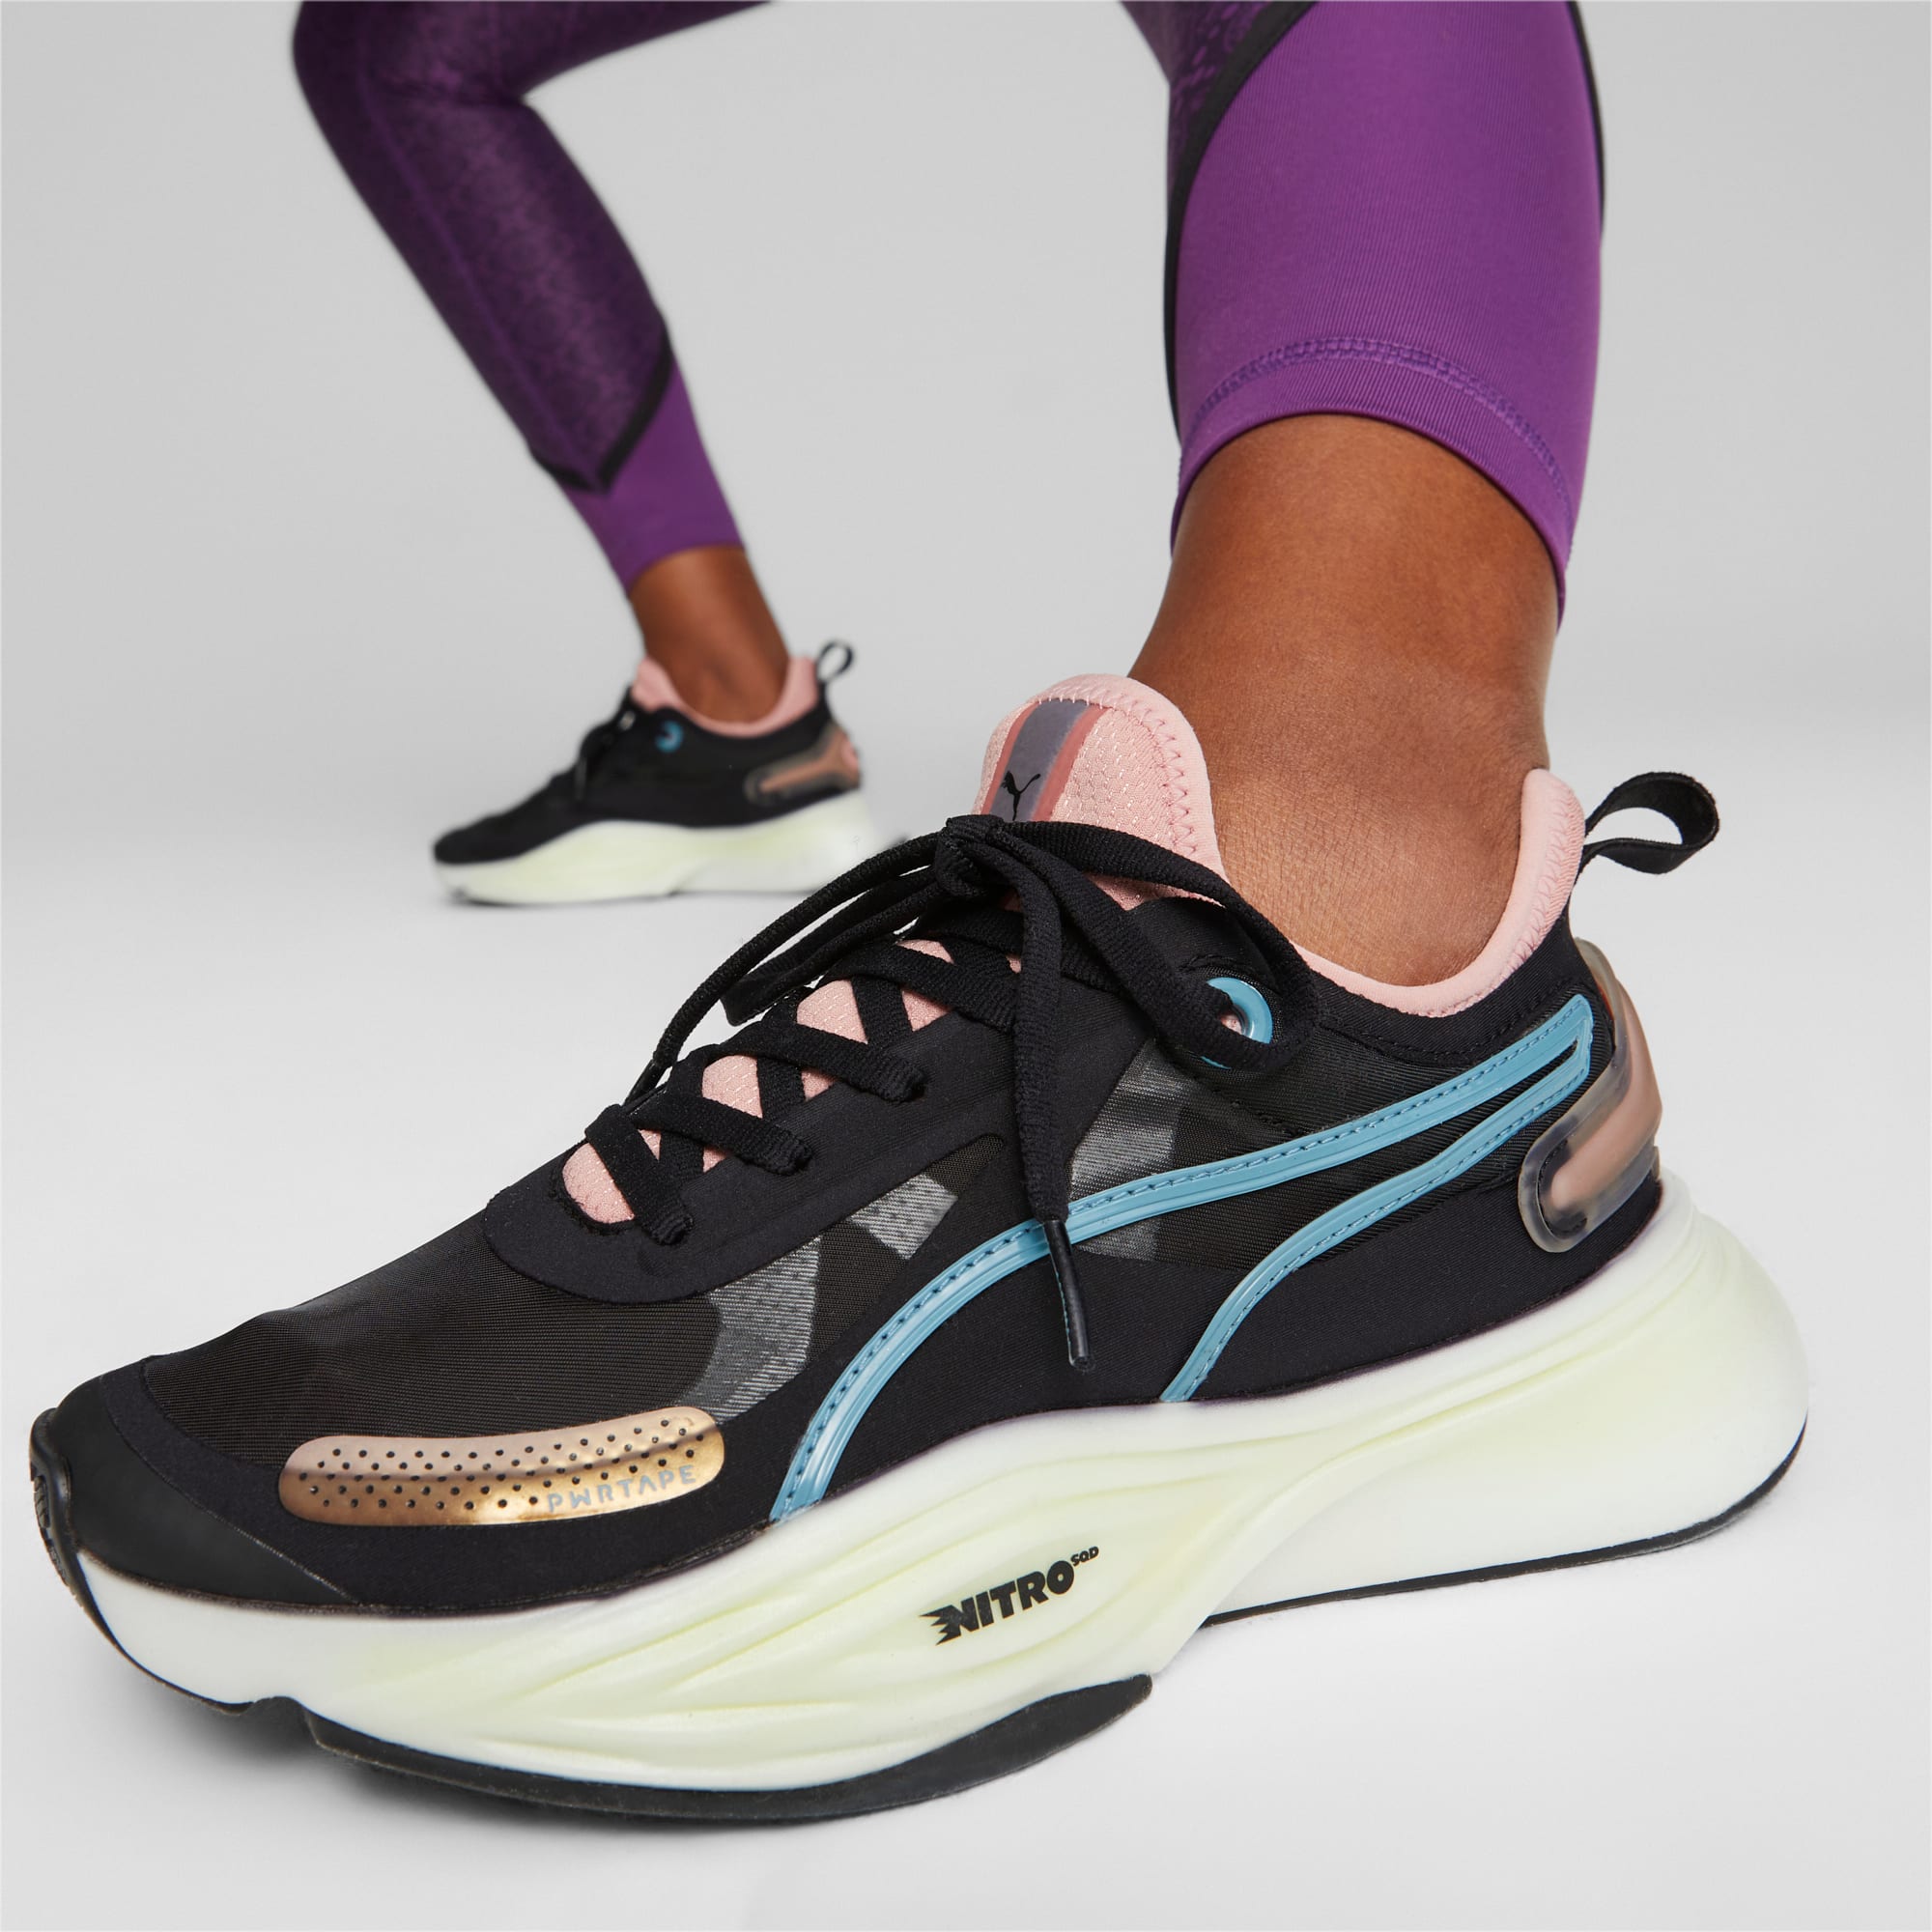 PUMA Pwr Nitro Sqd Women's Training Shoes, Black/Bold Blue/Future Pink, Size 35,5, Shoes